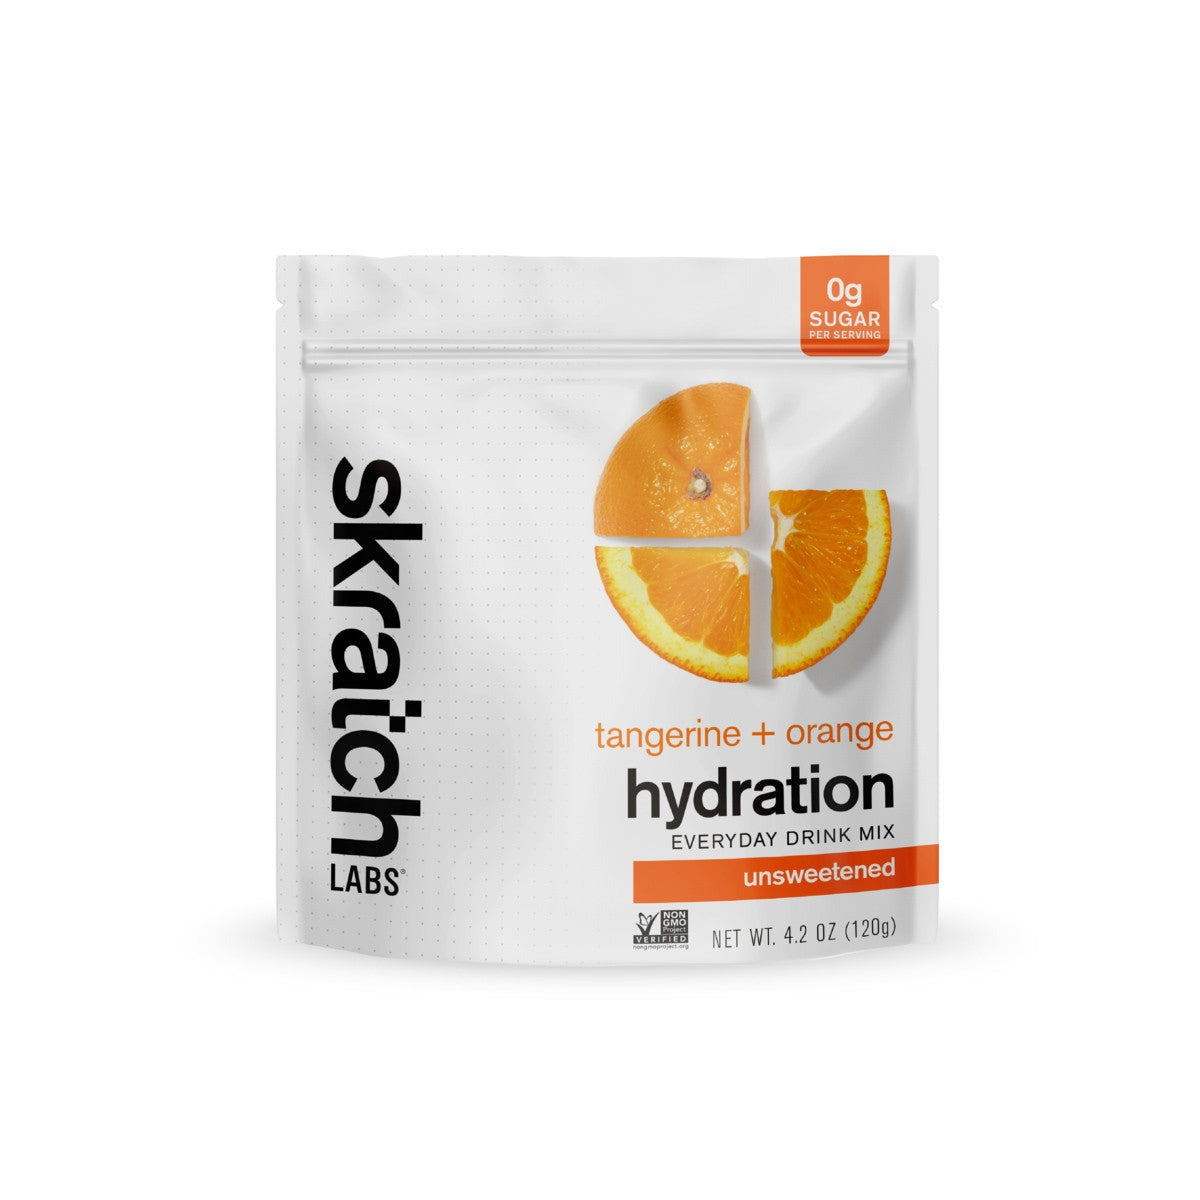 Hydration Everyday Drink Mix: Tangerine + Orange (120g)